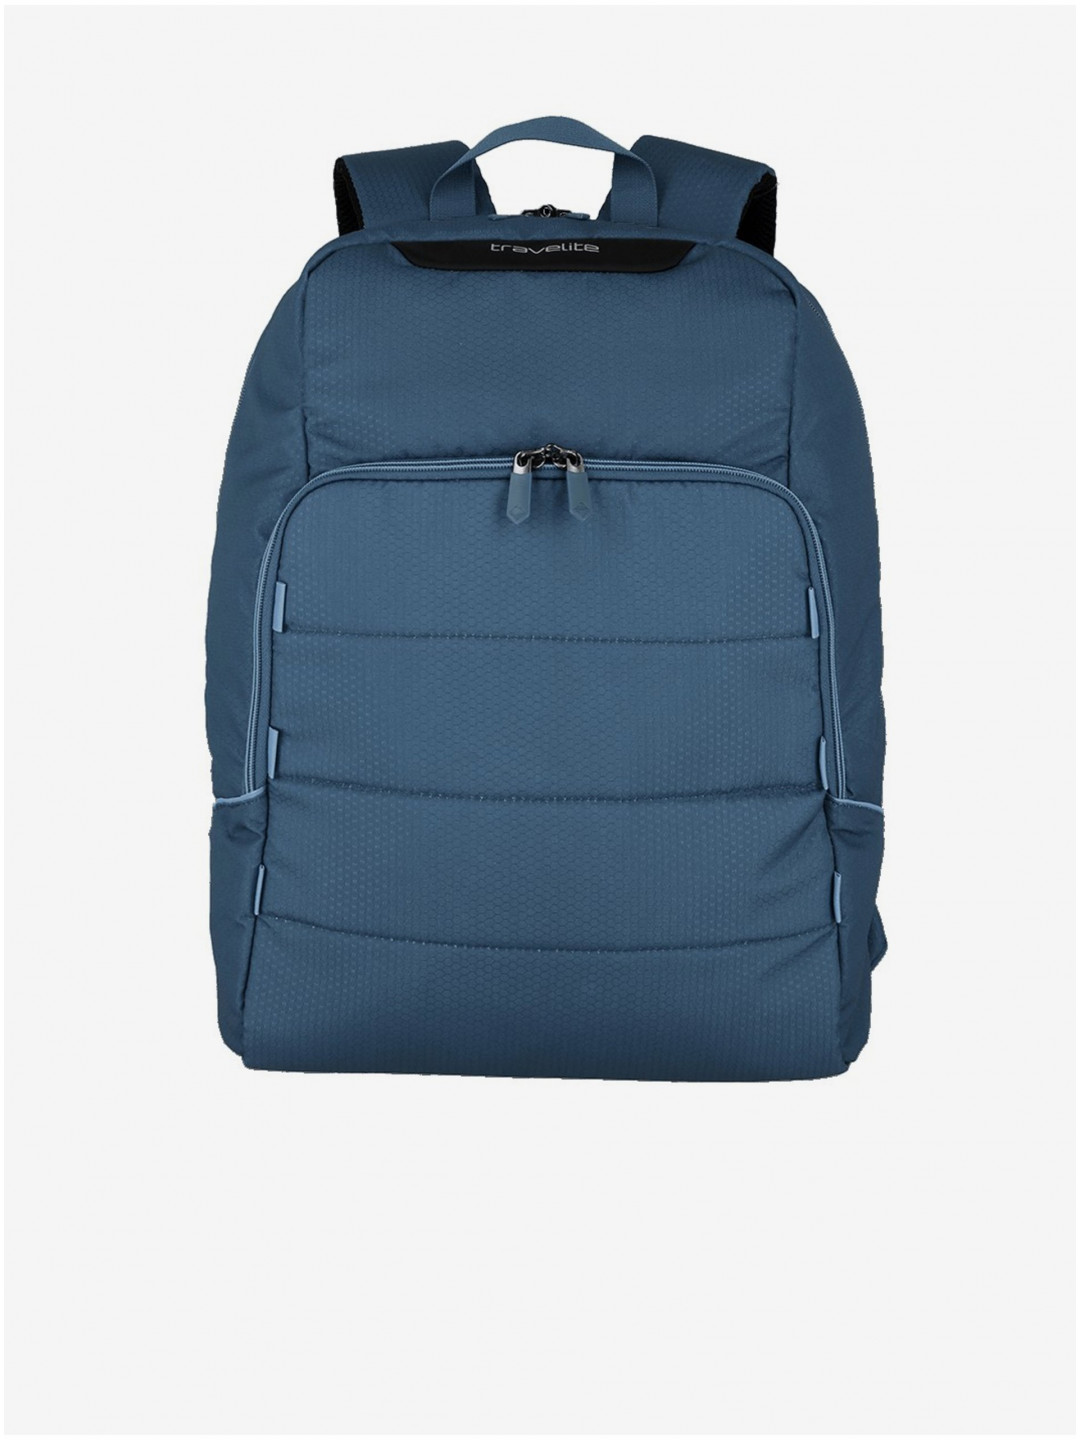 Modrý batoh Travelite Skaii Backpack